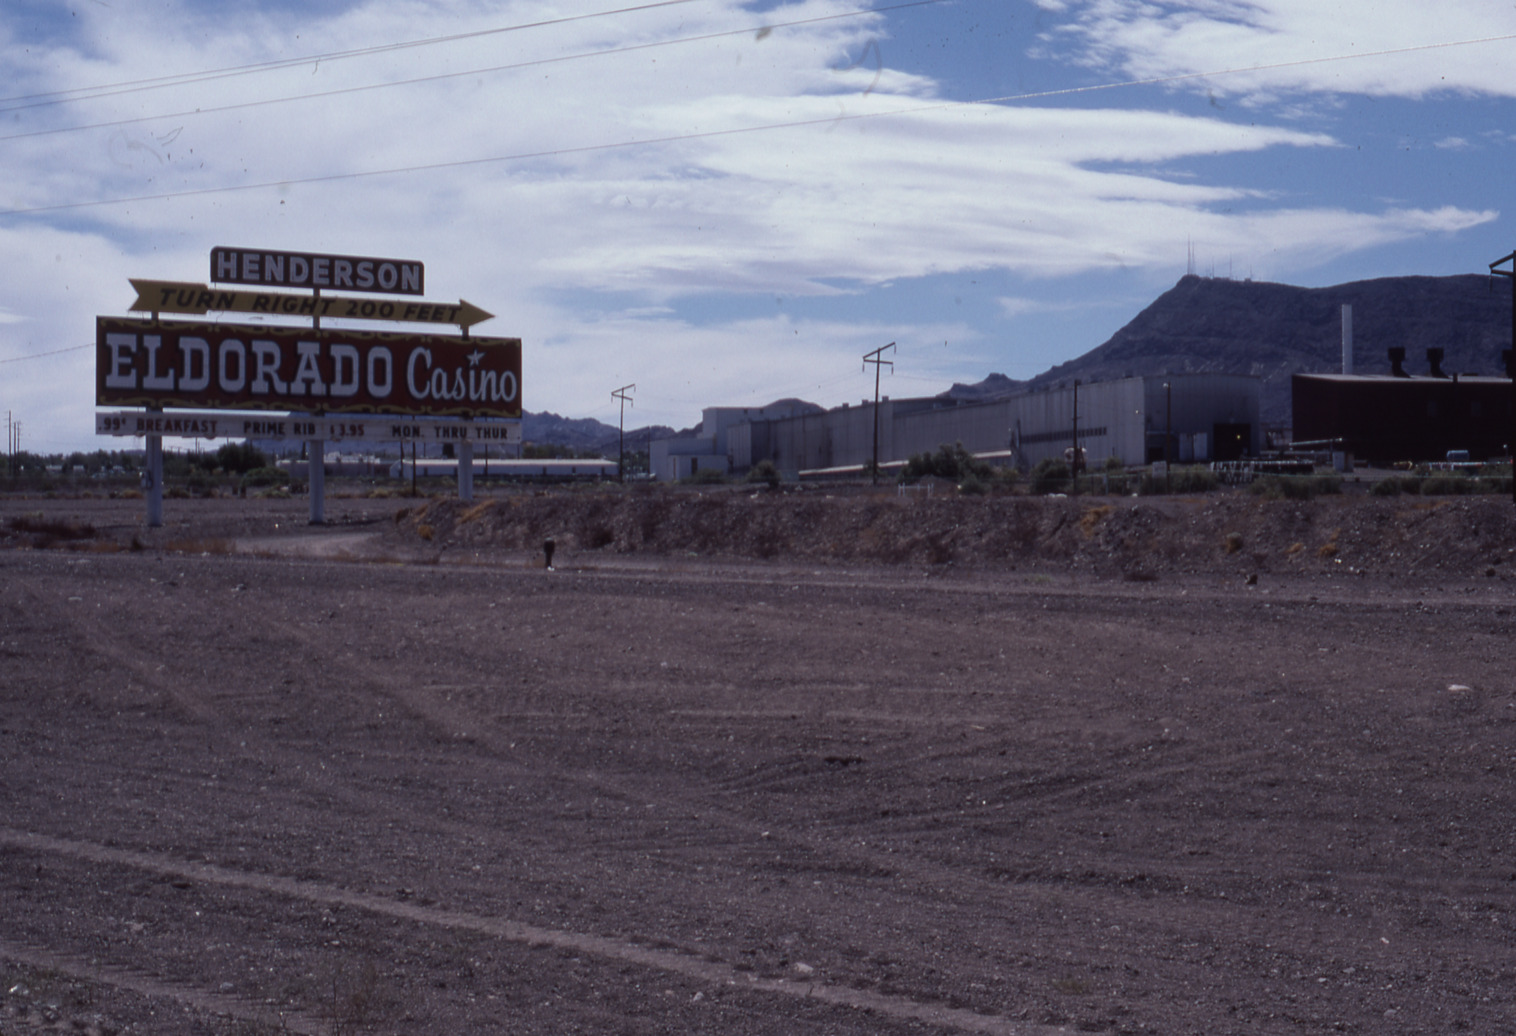 Eldorado Casino dual mounted pylon and marquee sign, Henderson, Nevada: photographic print